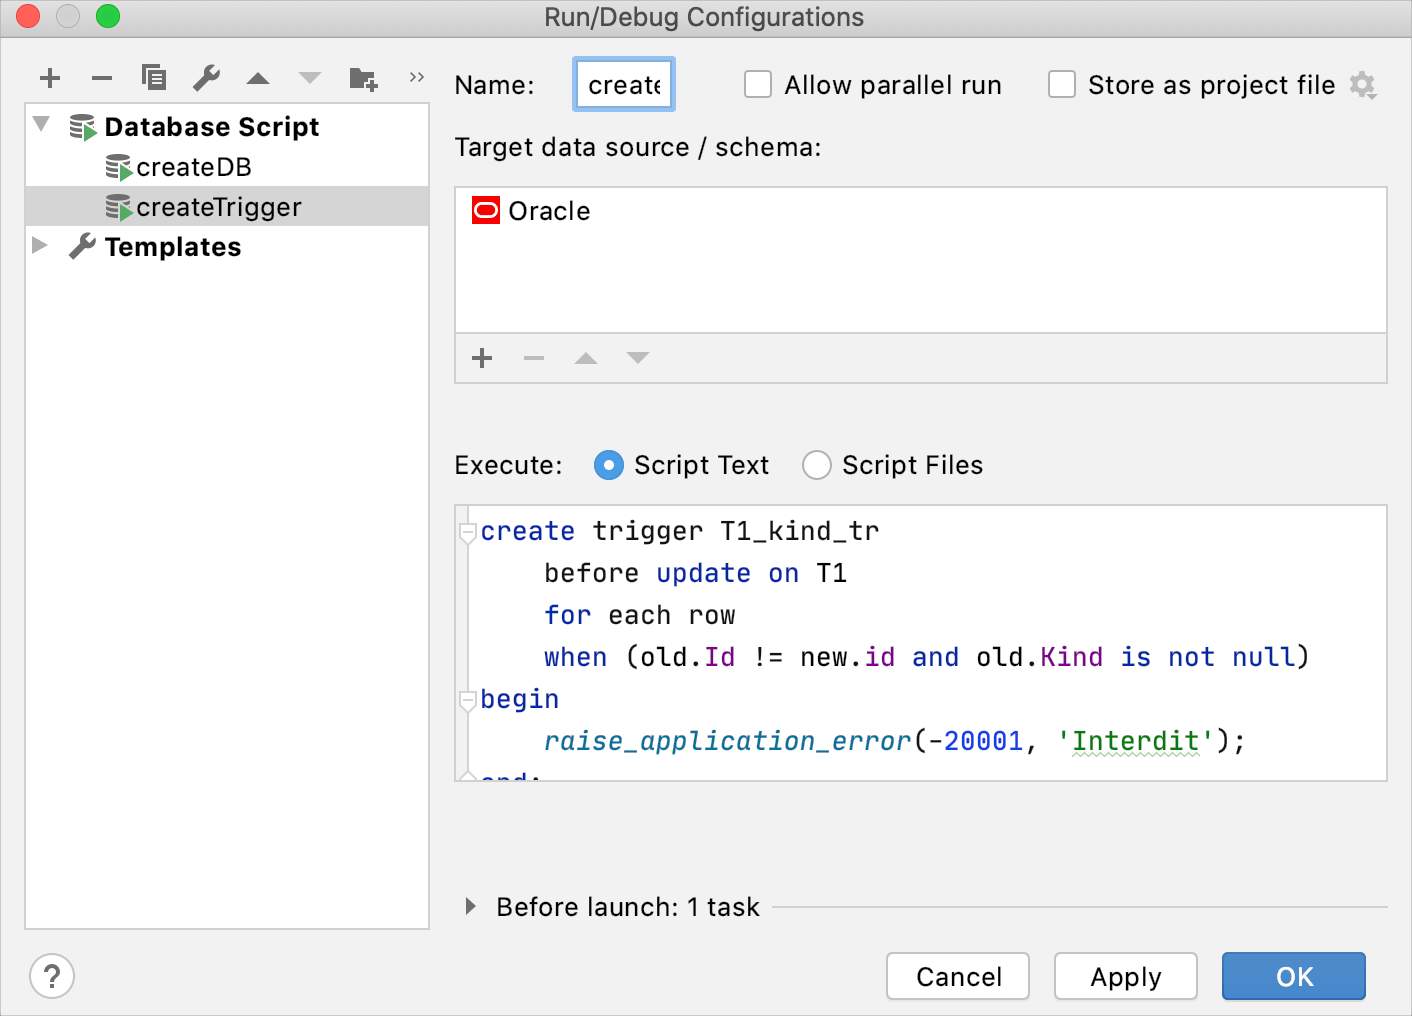 Run a script by using run/debug configurations